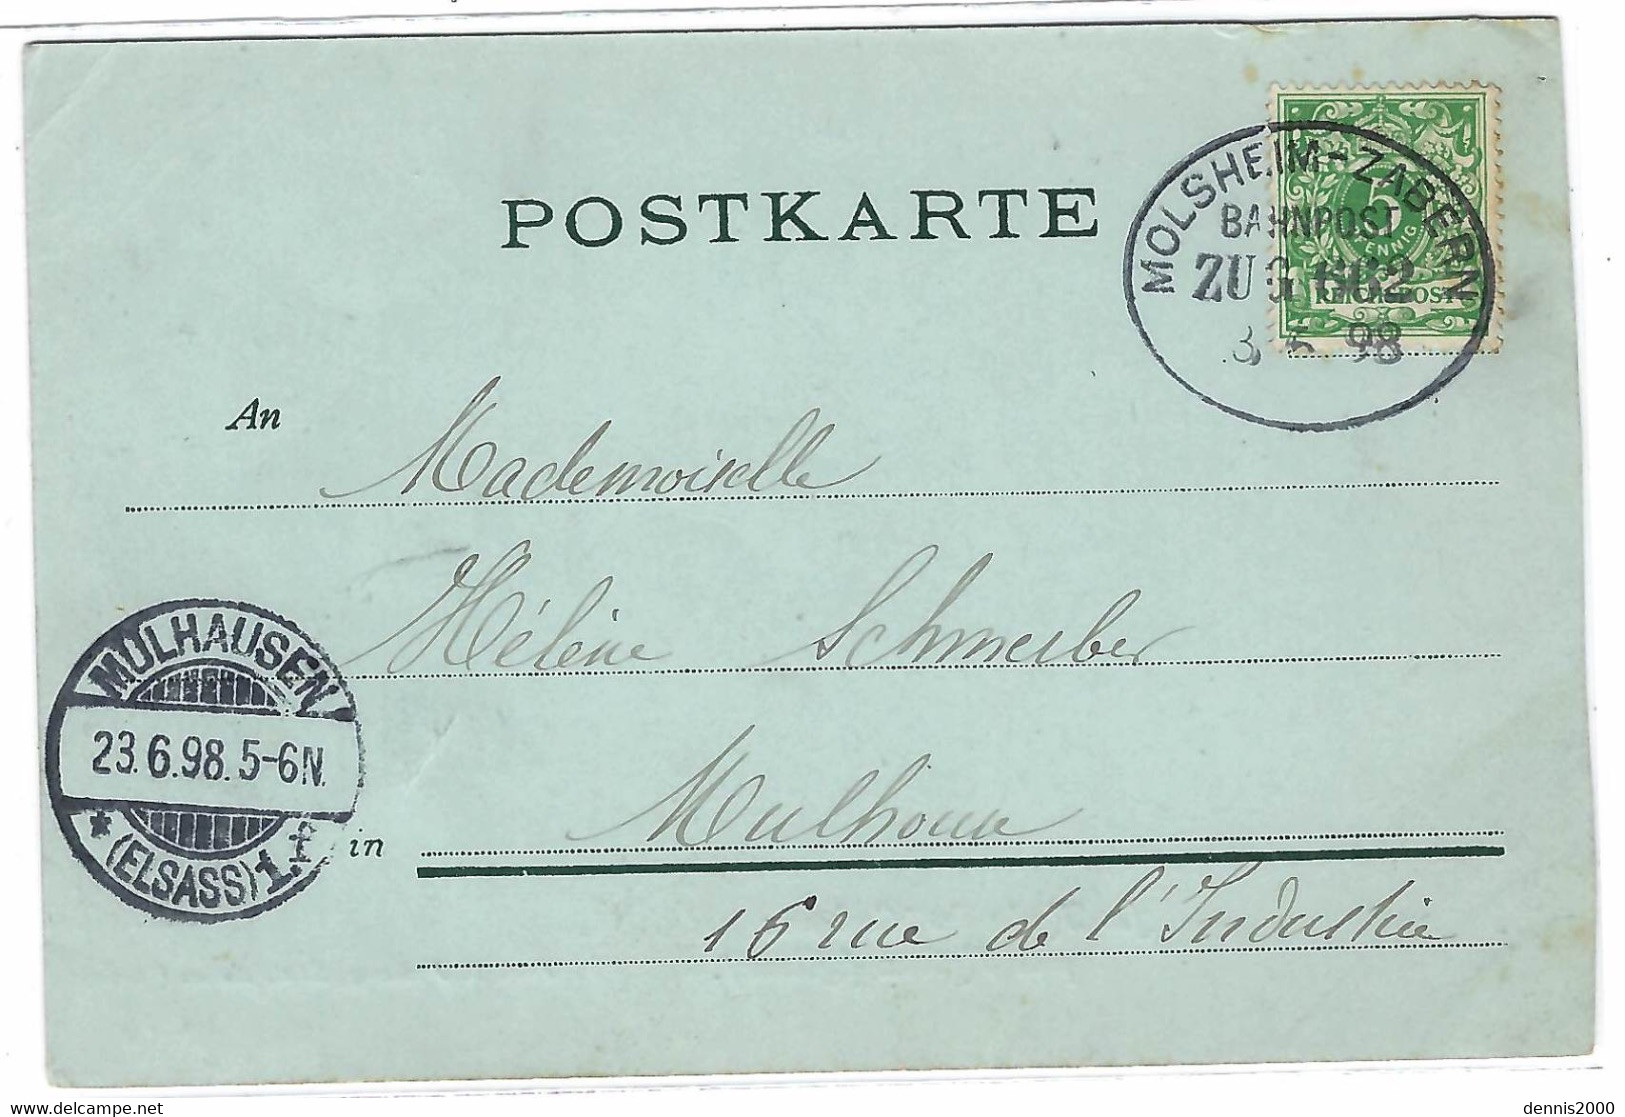 Près ROTHAU (67) - La Roche Des Corbeaux - Oblit. BAHNPOST ZUG 662, 1898 - Ed. Phot. L. J. Koenig, Rothau - Rothau